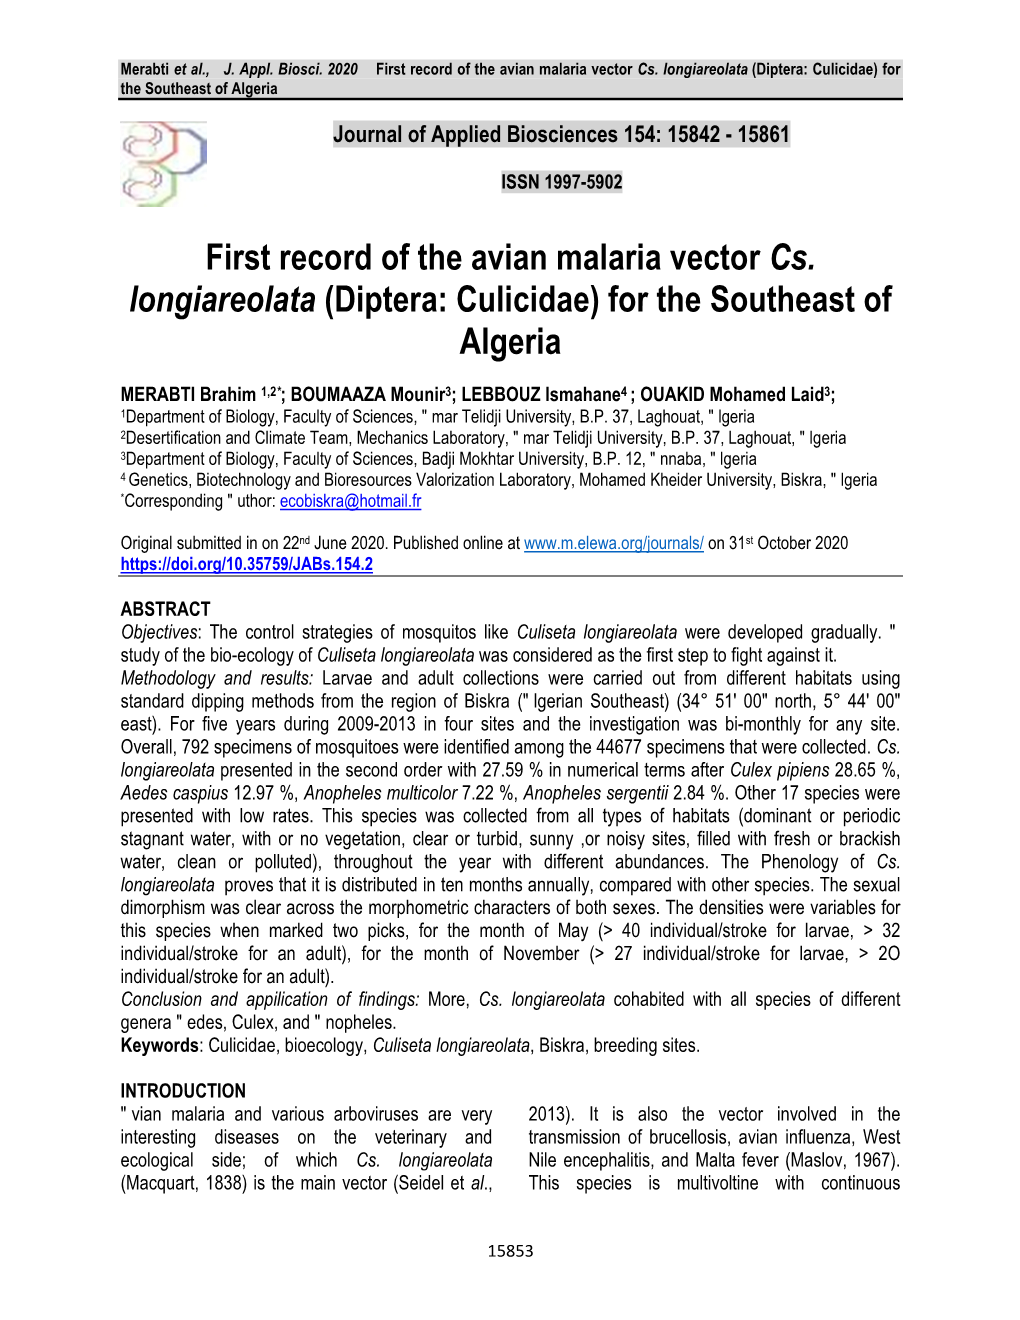 First Record of the Avian Malaria Vector Cs. Longiareolata (Diptera: Culicidae) for the Southeast of Algeria